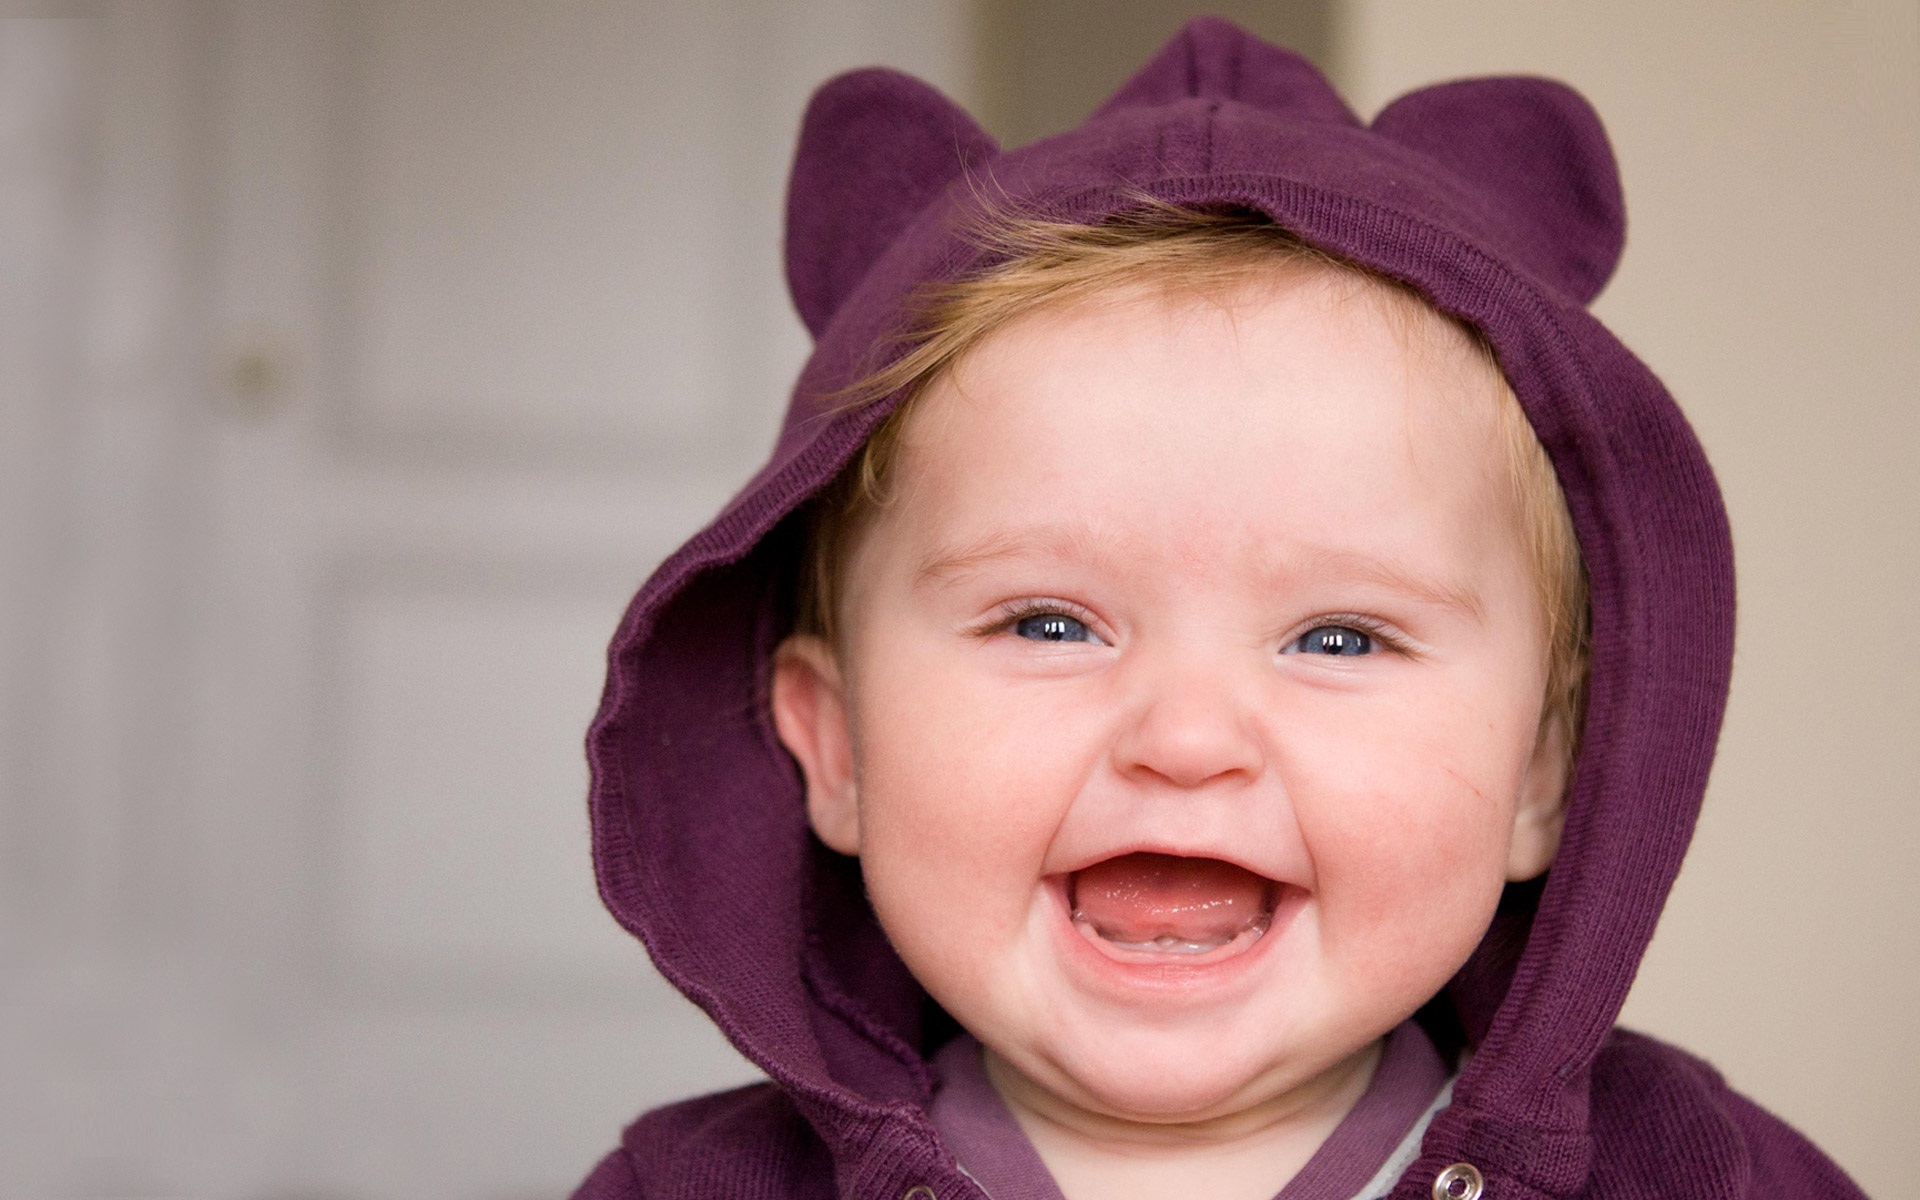 Amazing Smile Cute Baby HD Wallpaper